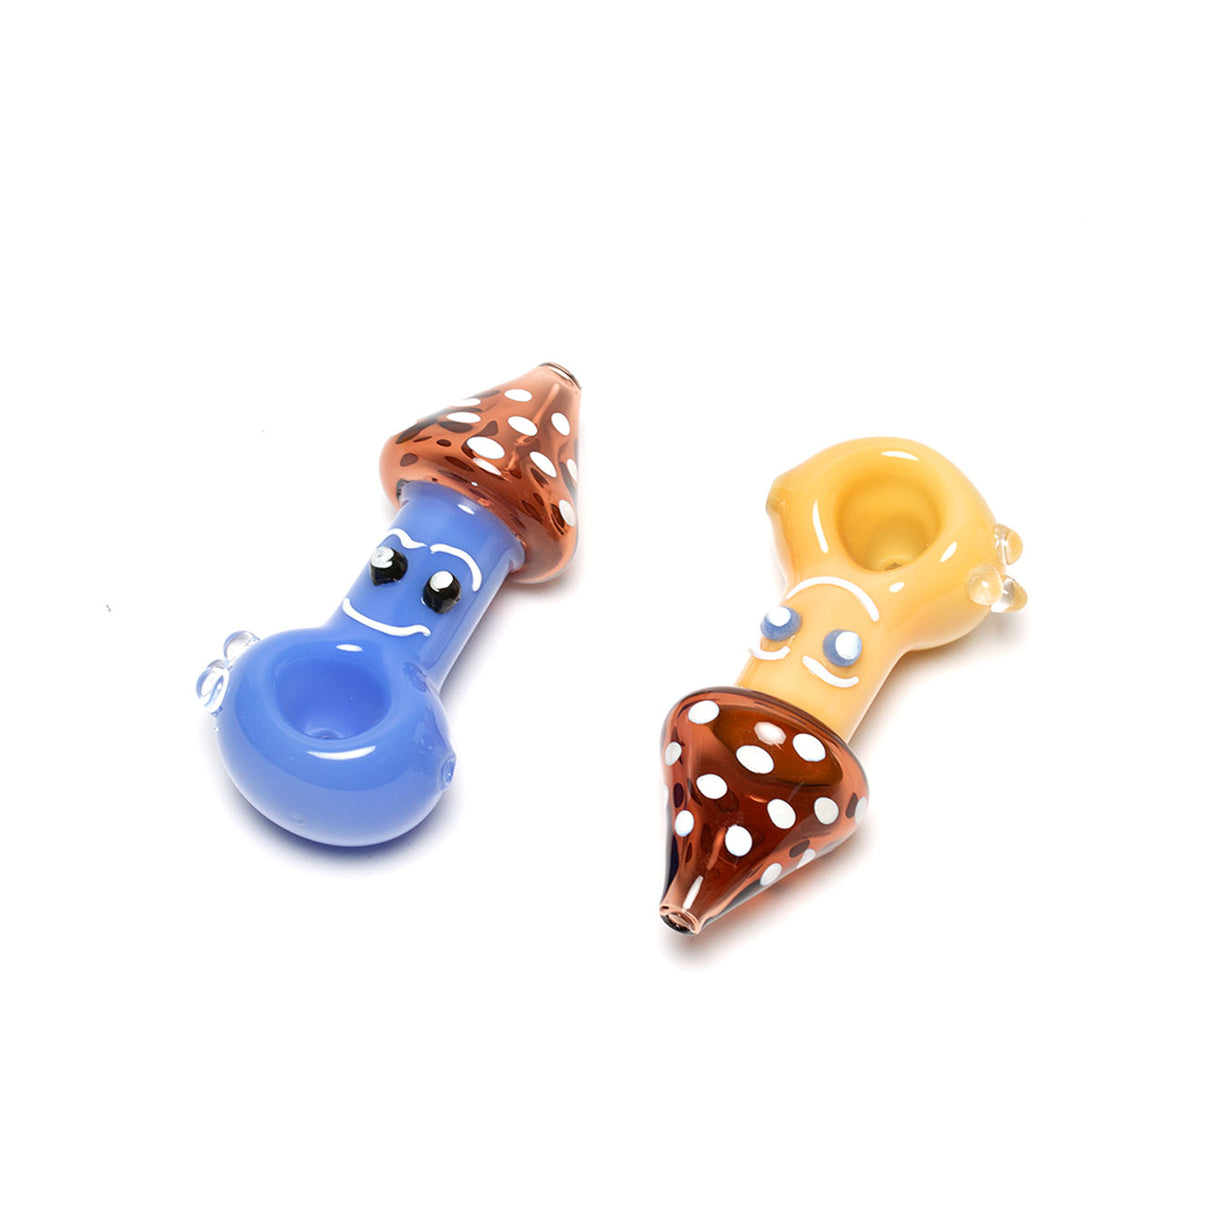 5″ Colored Mushroom Glass Pipe Unishowinc 5″ Colored Mushroom Glass Pipe